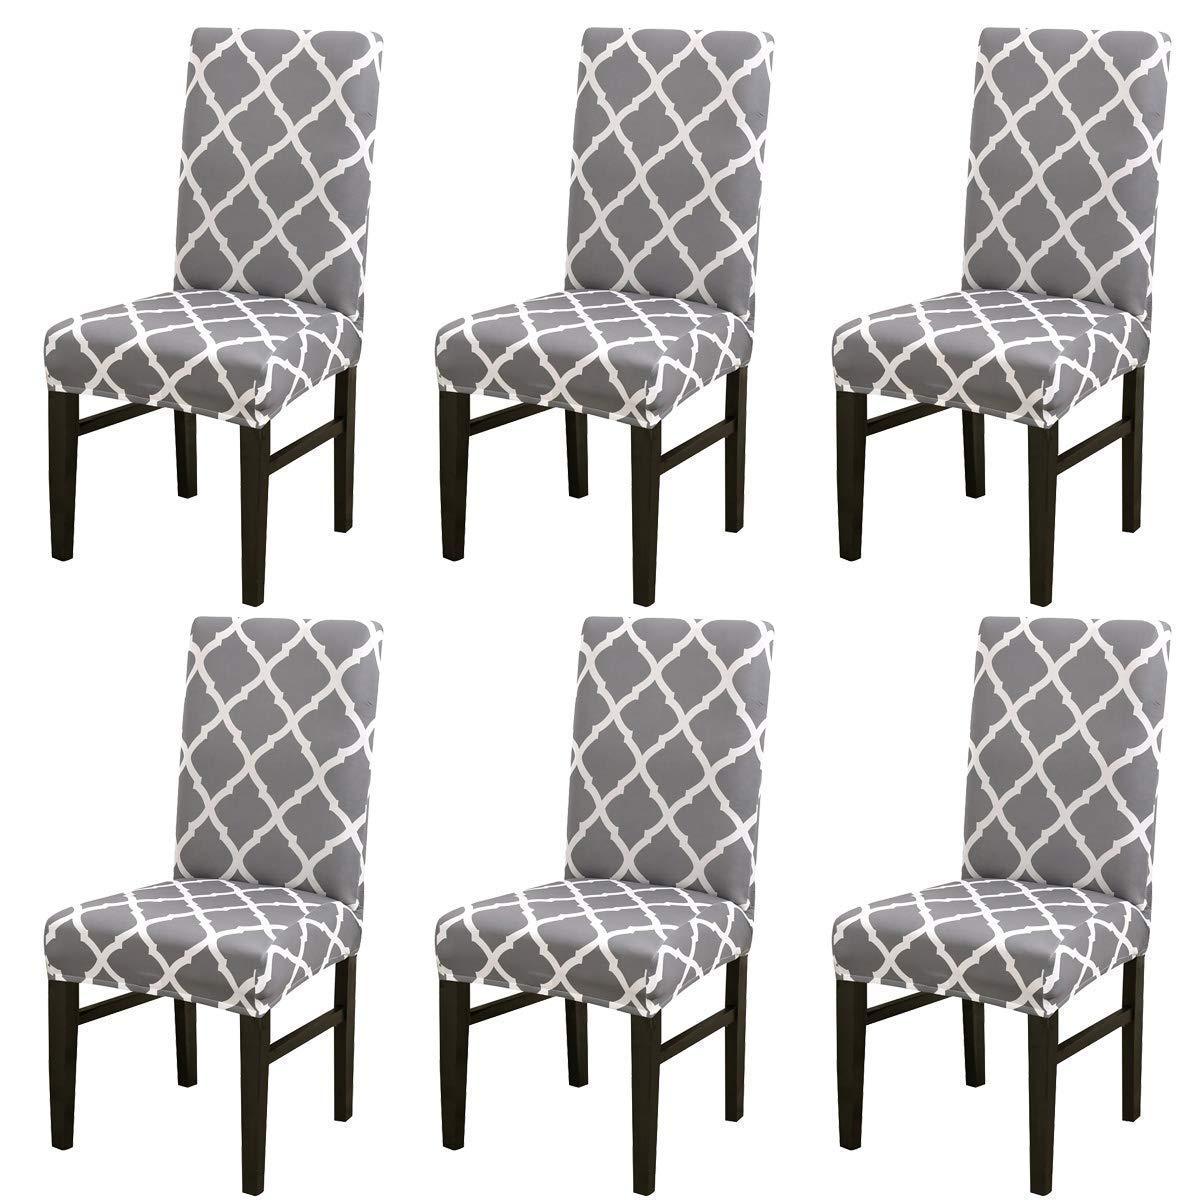 Printed Elastic Chair Cover - Grey Diamond